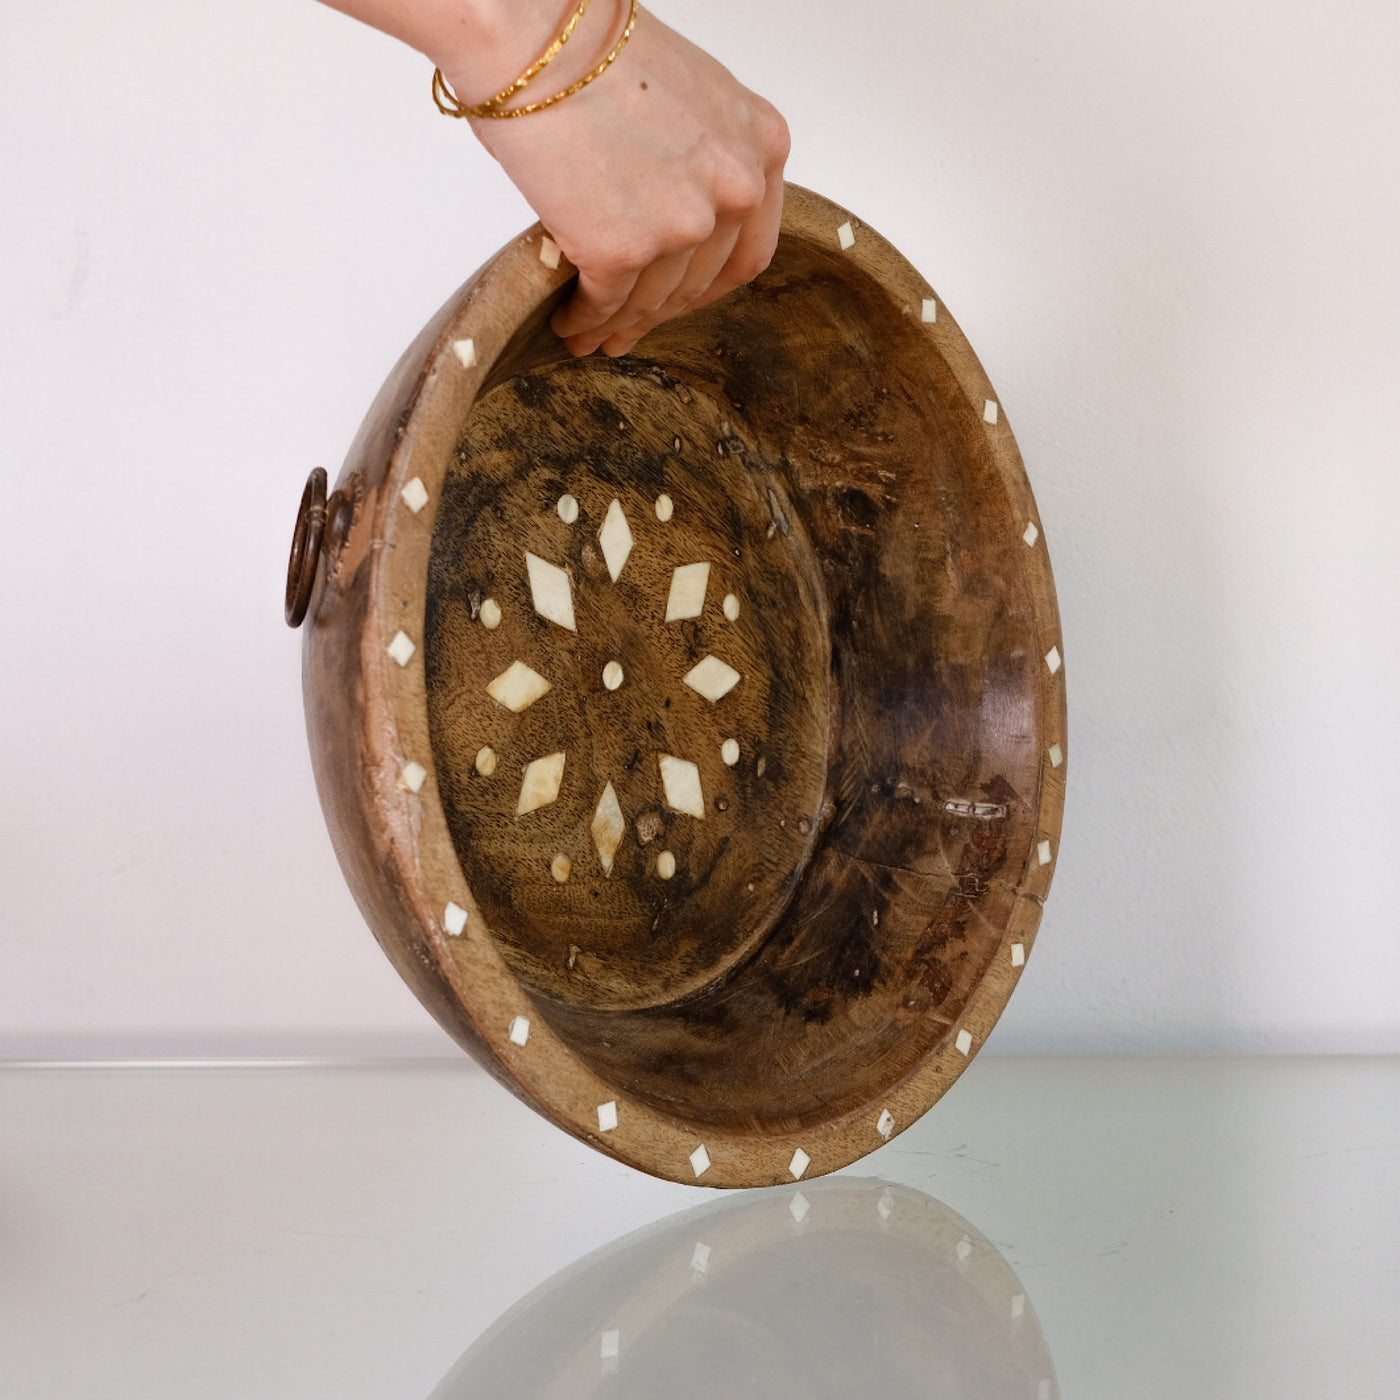 Katora n ° 3 - old wooden basket and bone inlays (wax finish)